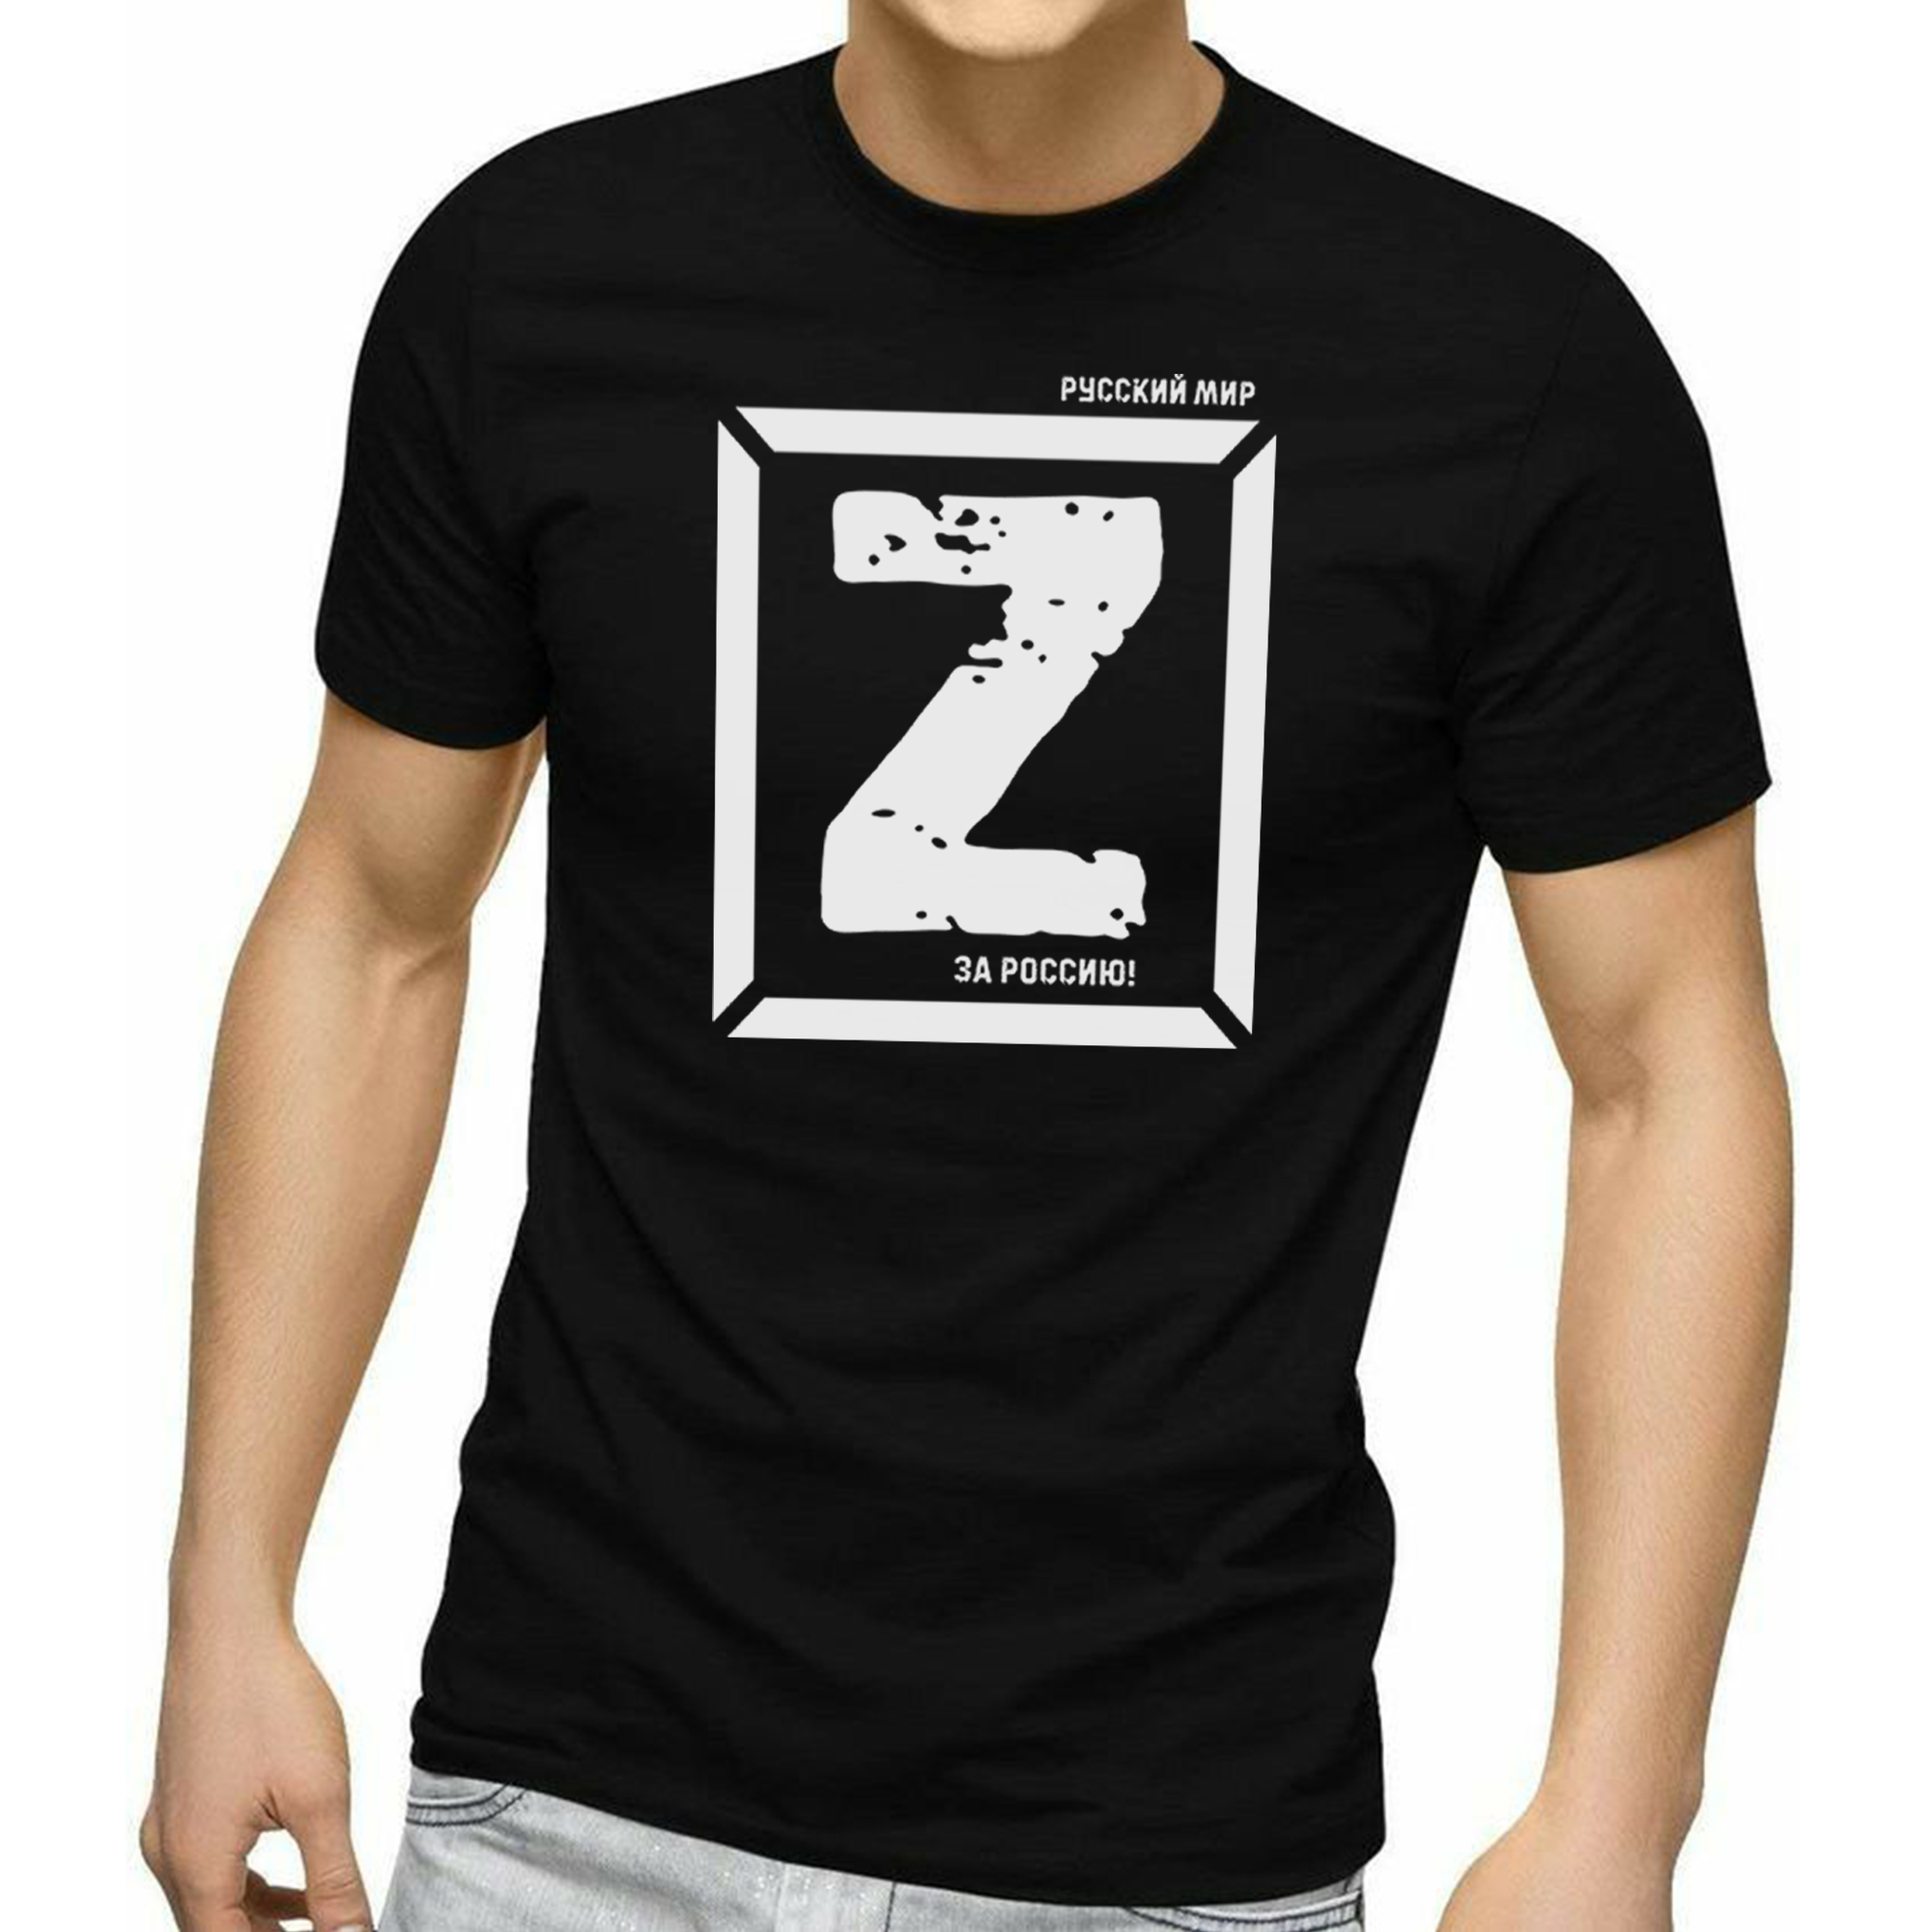 Купить футболку s. Футболка z. Футболки мужские с логотипом z. Футболка с буквой z. Майка с буквой z.